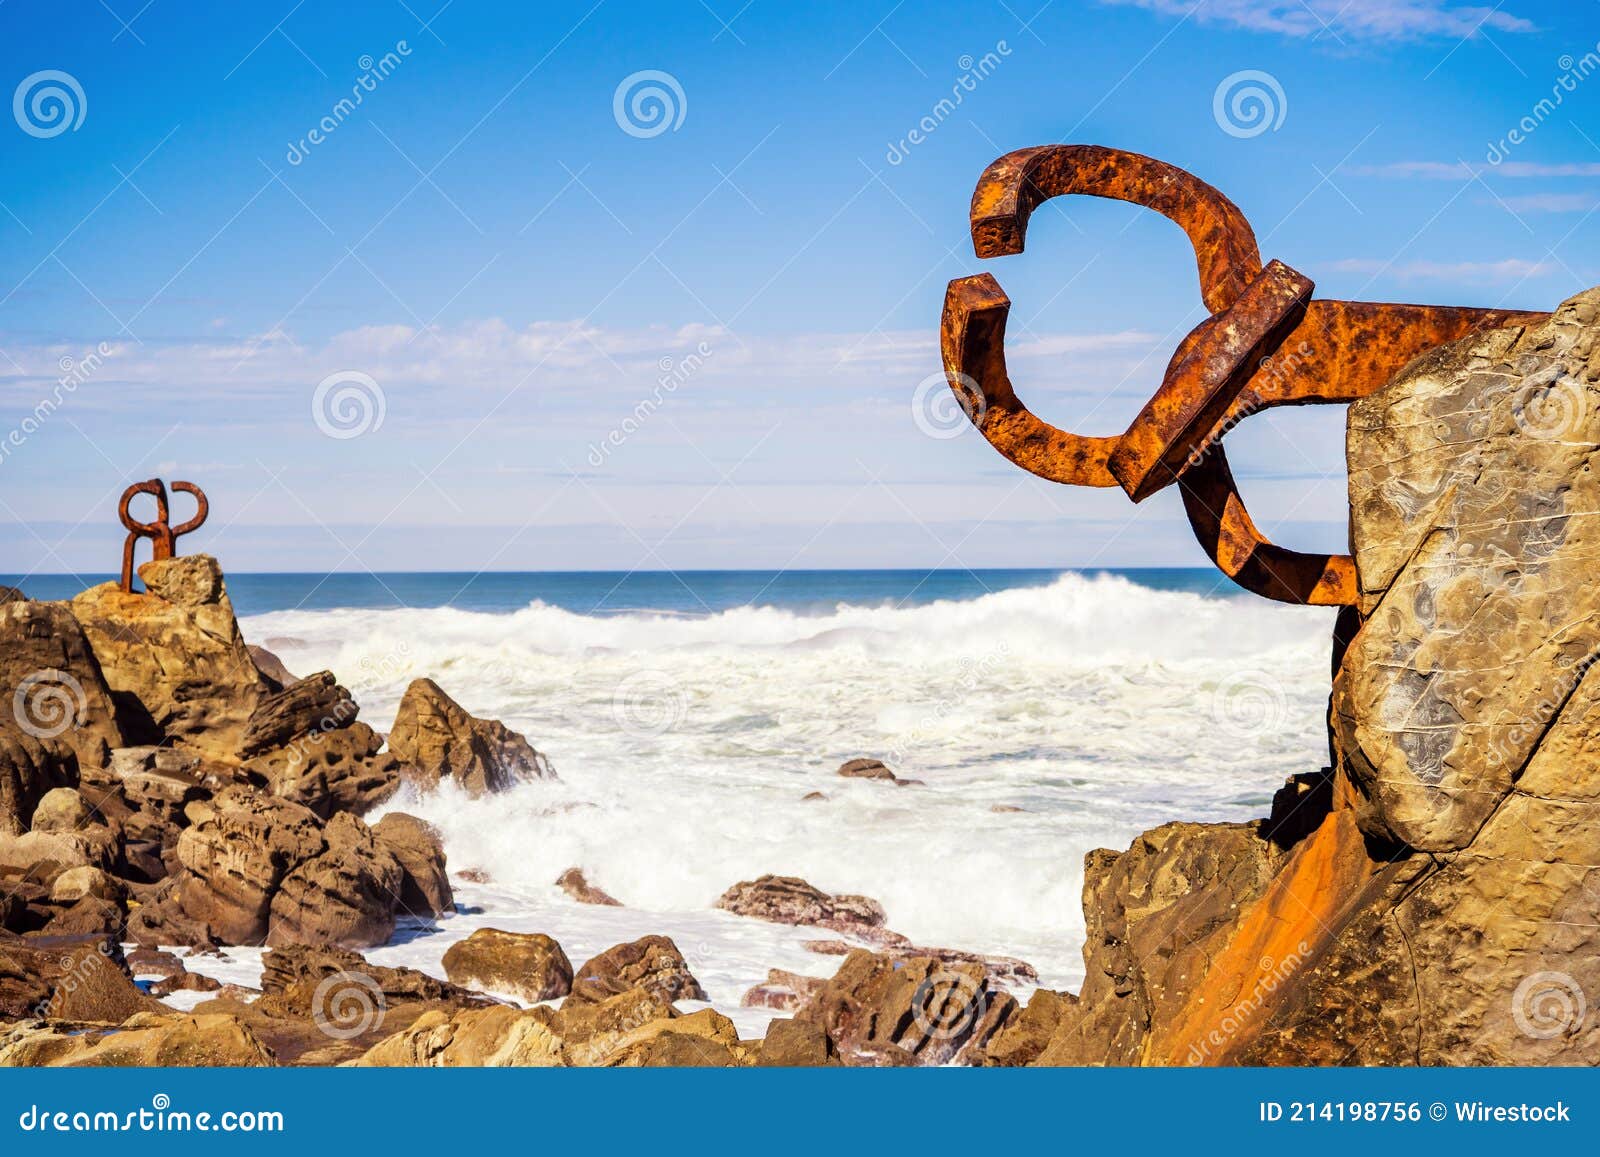 vertic shot of the peine del viento sculptures of eduardo chillida at the beach in spain